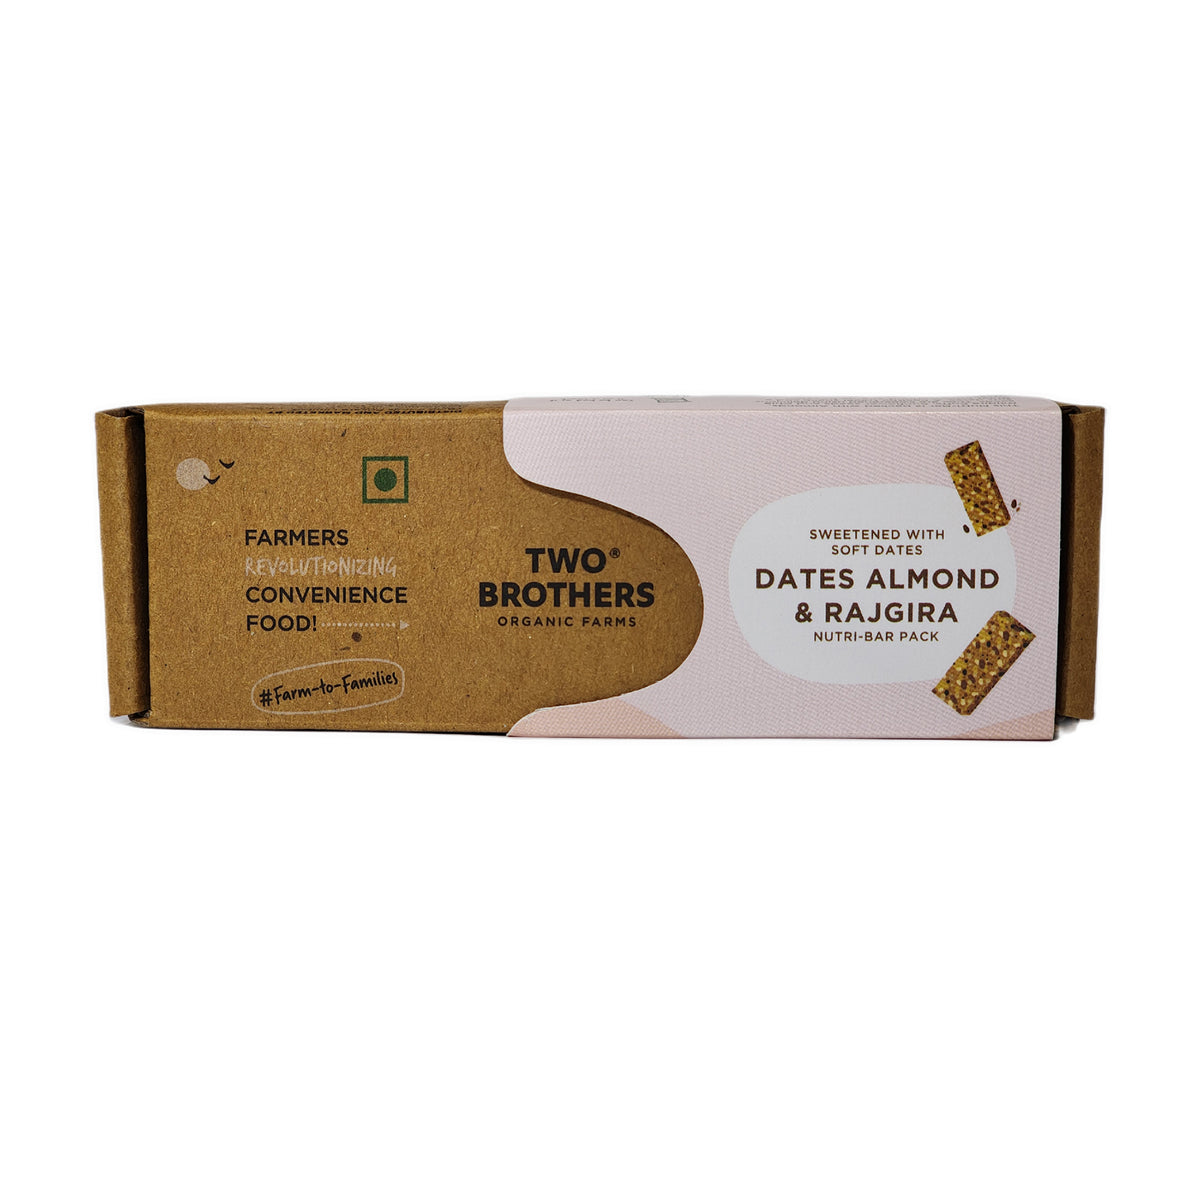 Dates Almond & Rajgira Nutri bar Pack - 3 bars